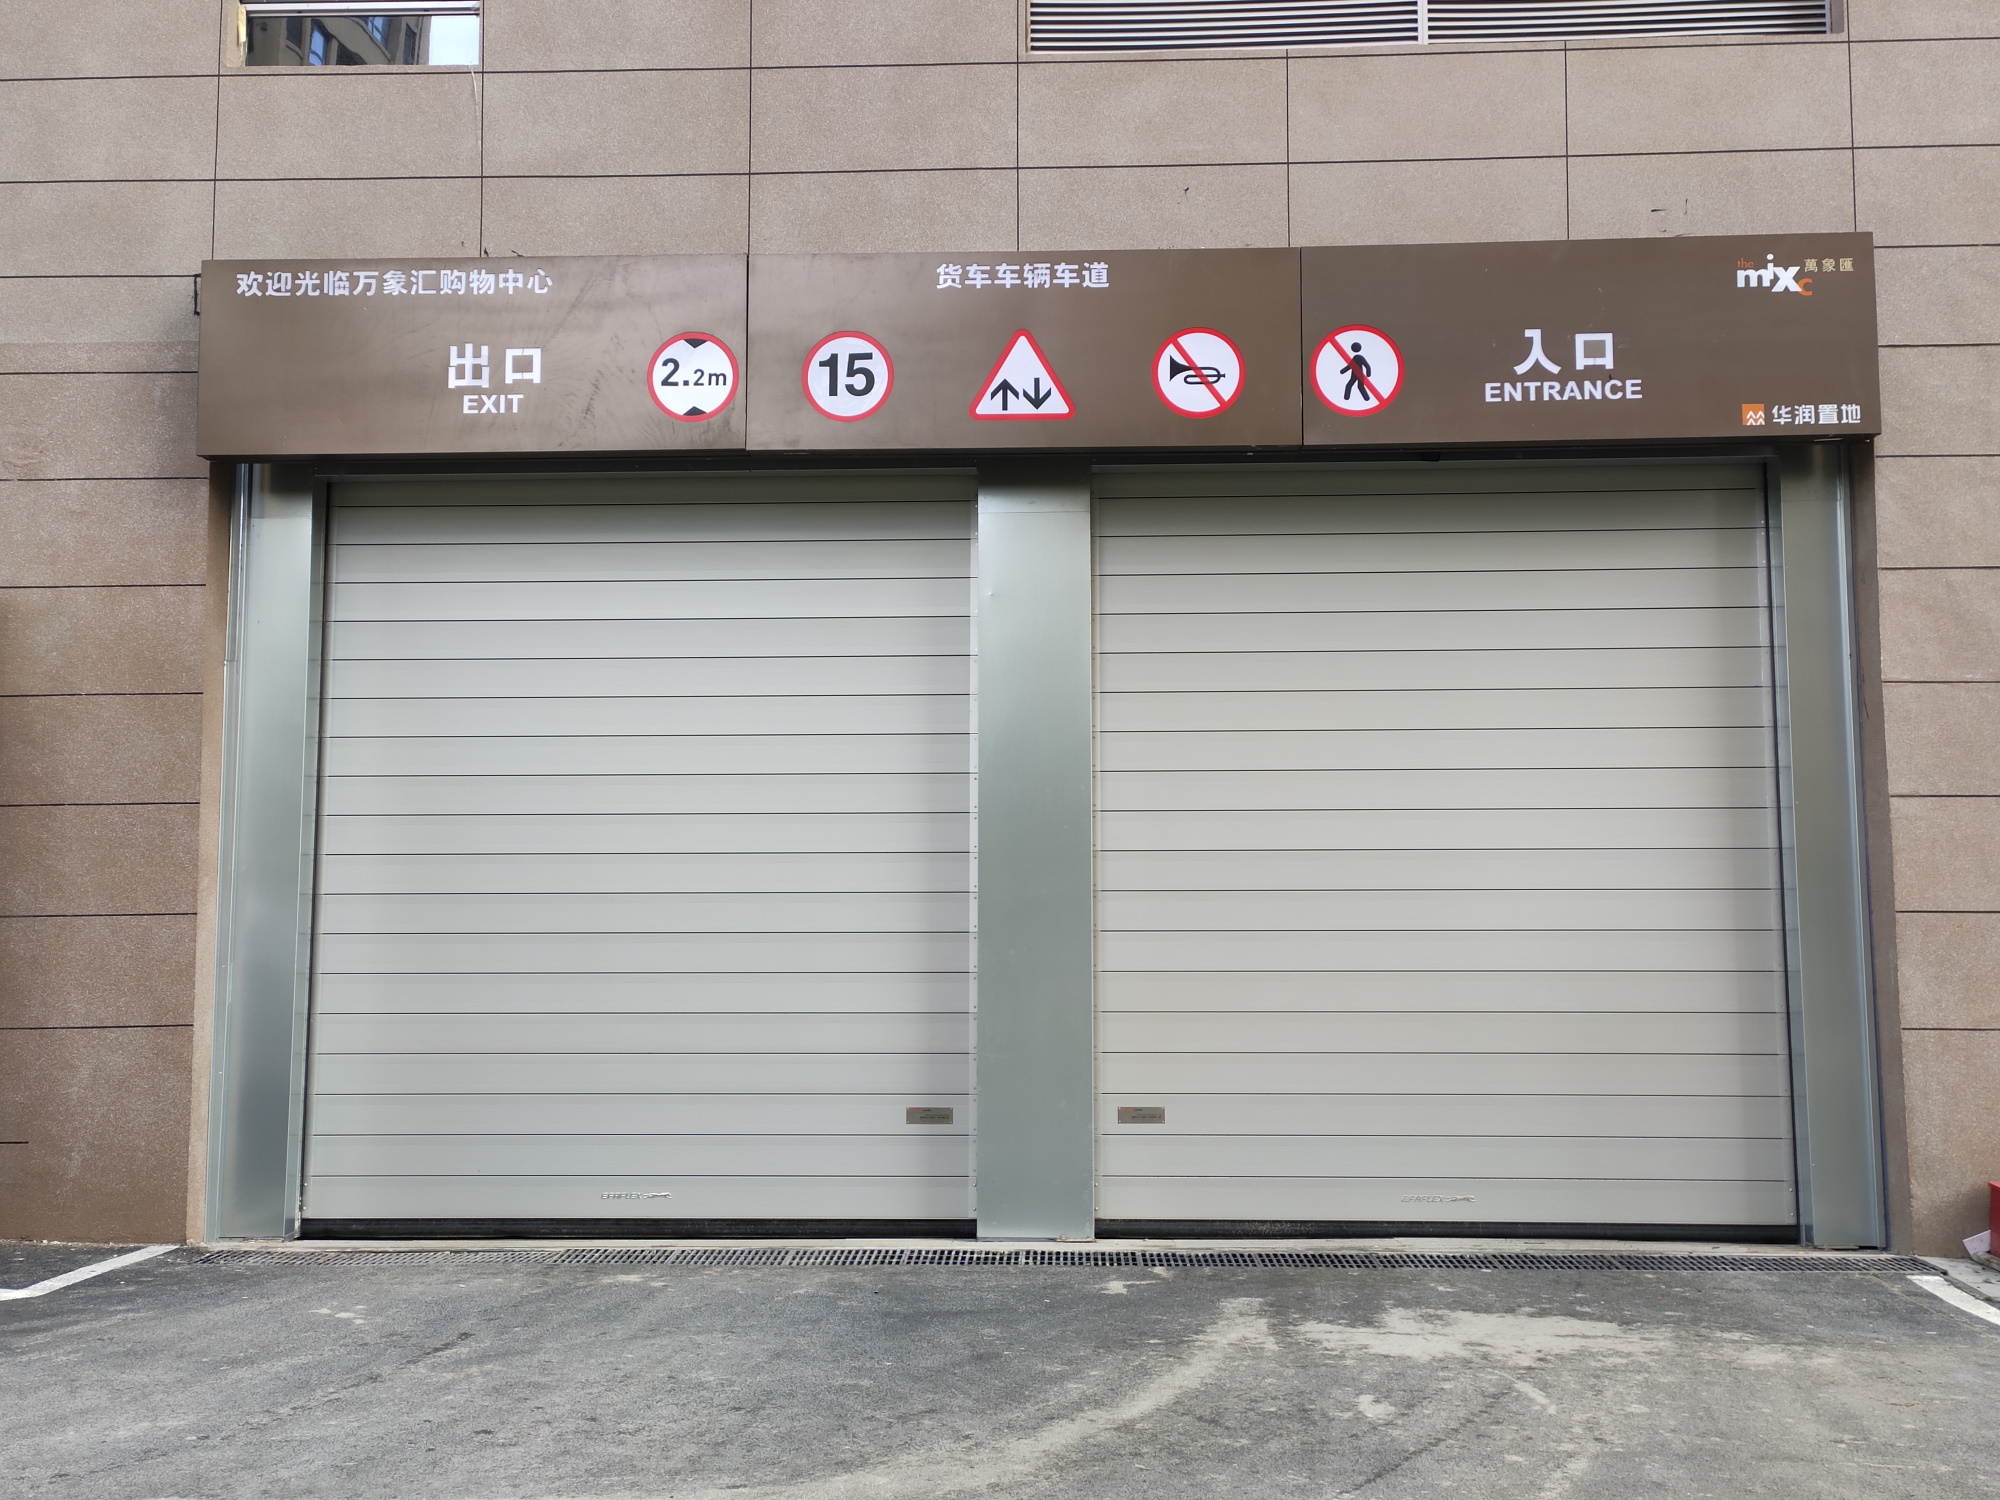 EFAFLEX High-Speed Doors Harbin FUN2 Shopping Mall, China